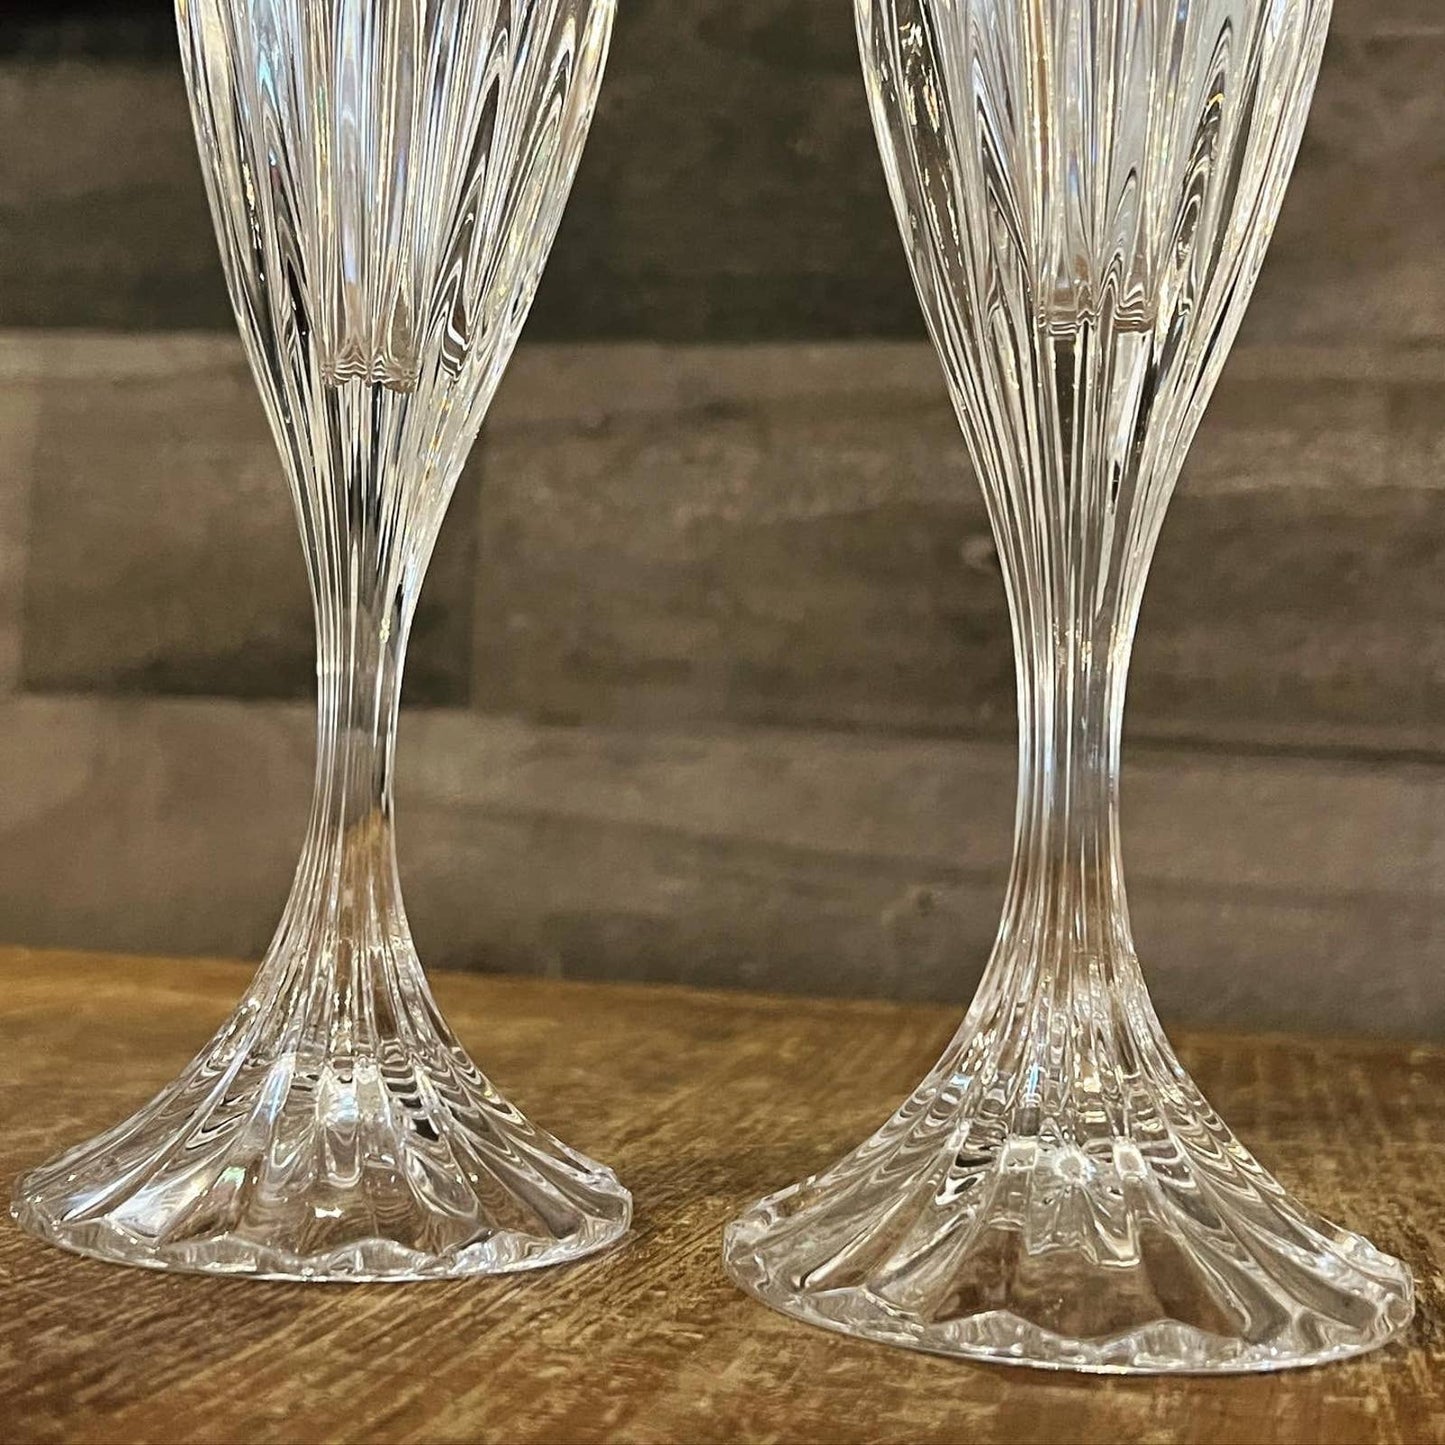 Pair of Mikasa crystal Park Lane faceted short stem heavy champagne fluted glasses - elegant glasses - bar glasses - bar cart glasses